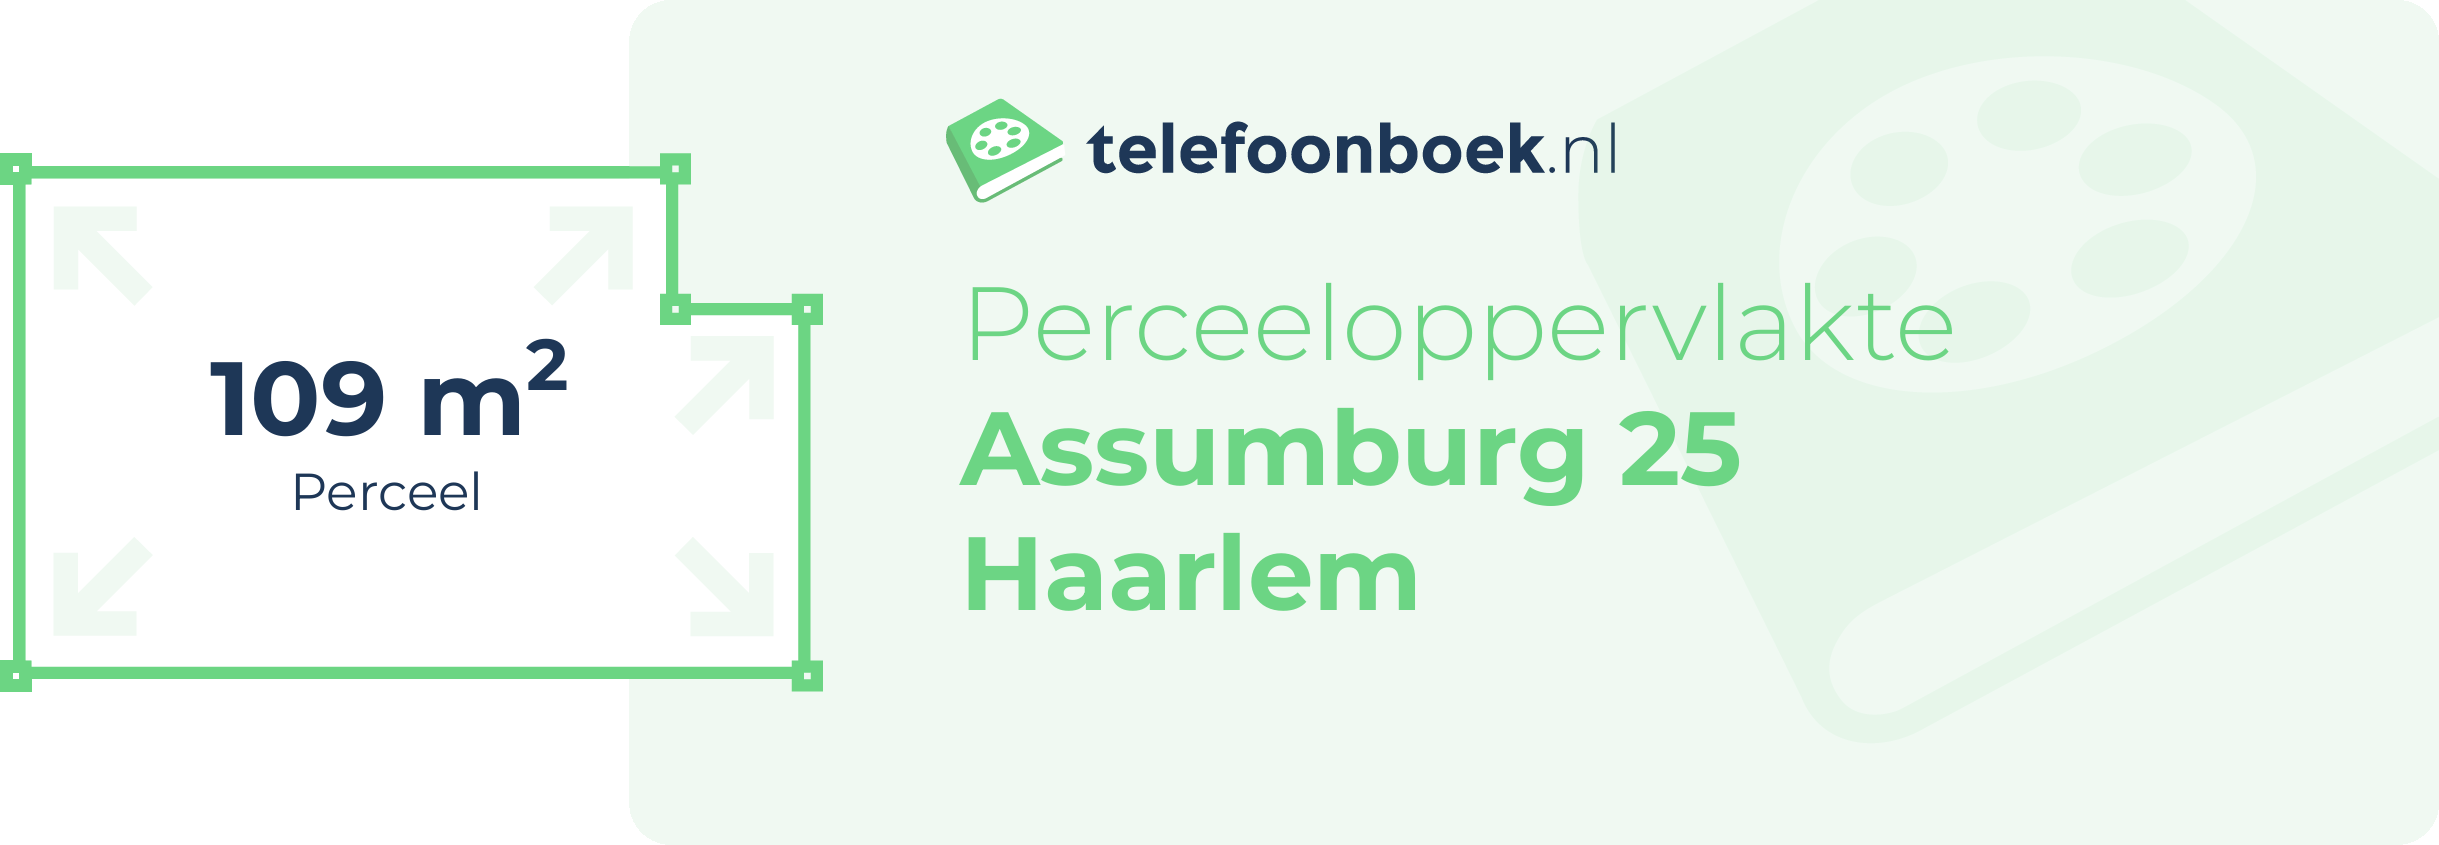 Perceeloppervlakte Assumburg 25 Haarlem